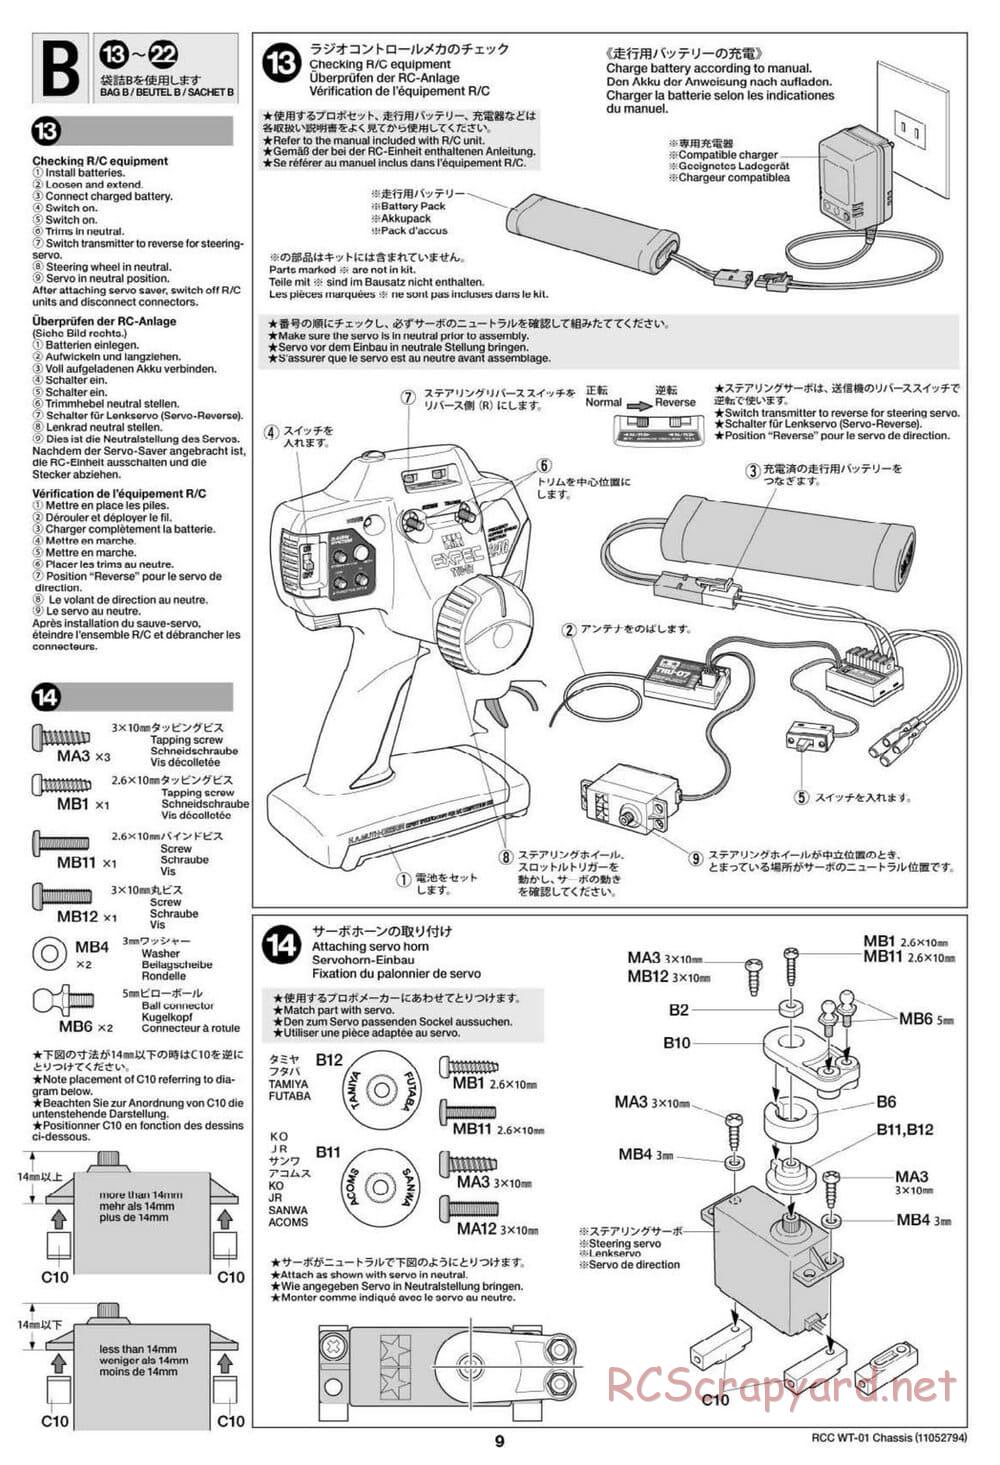 Tamiya - Mud Blaster II - WT-01 Chassis - Manual - Page 9